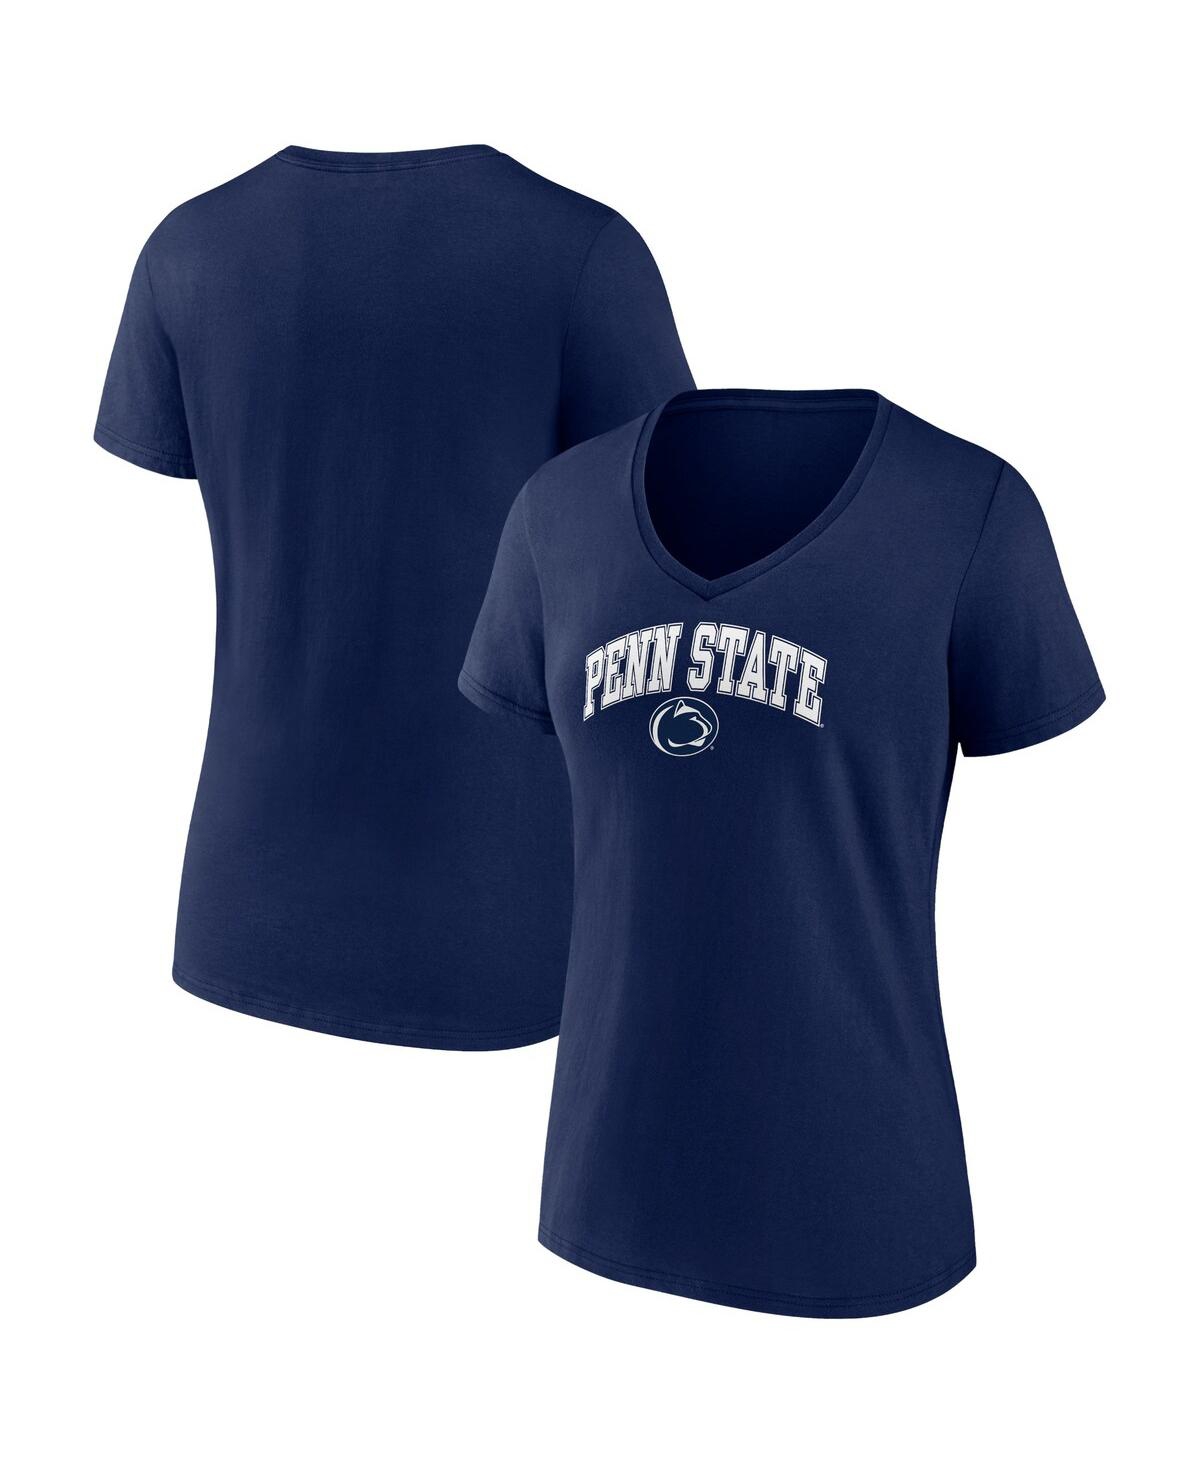 Women's Fanatics Navy Penn State Nittany Lions Evergreen Campus V-Neck T-shirt - Navy